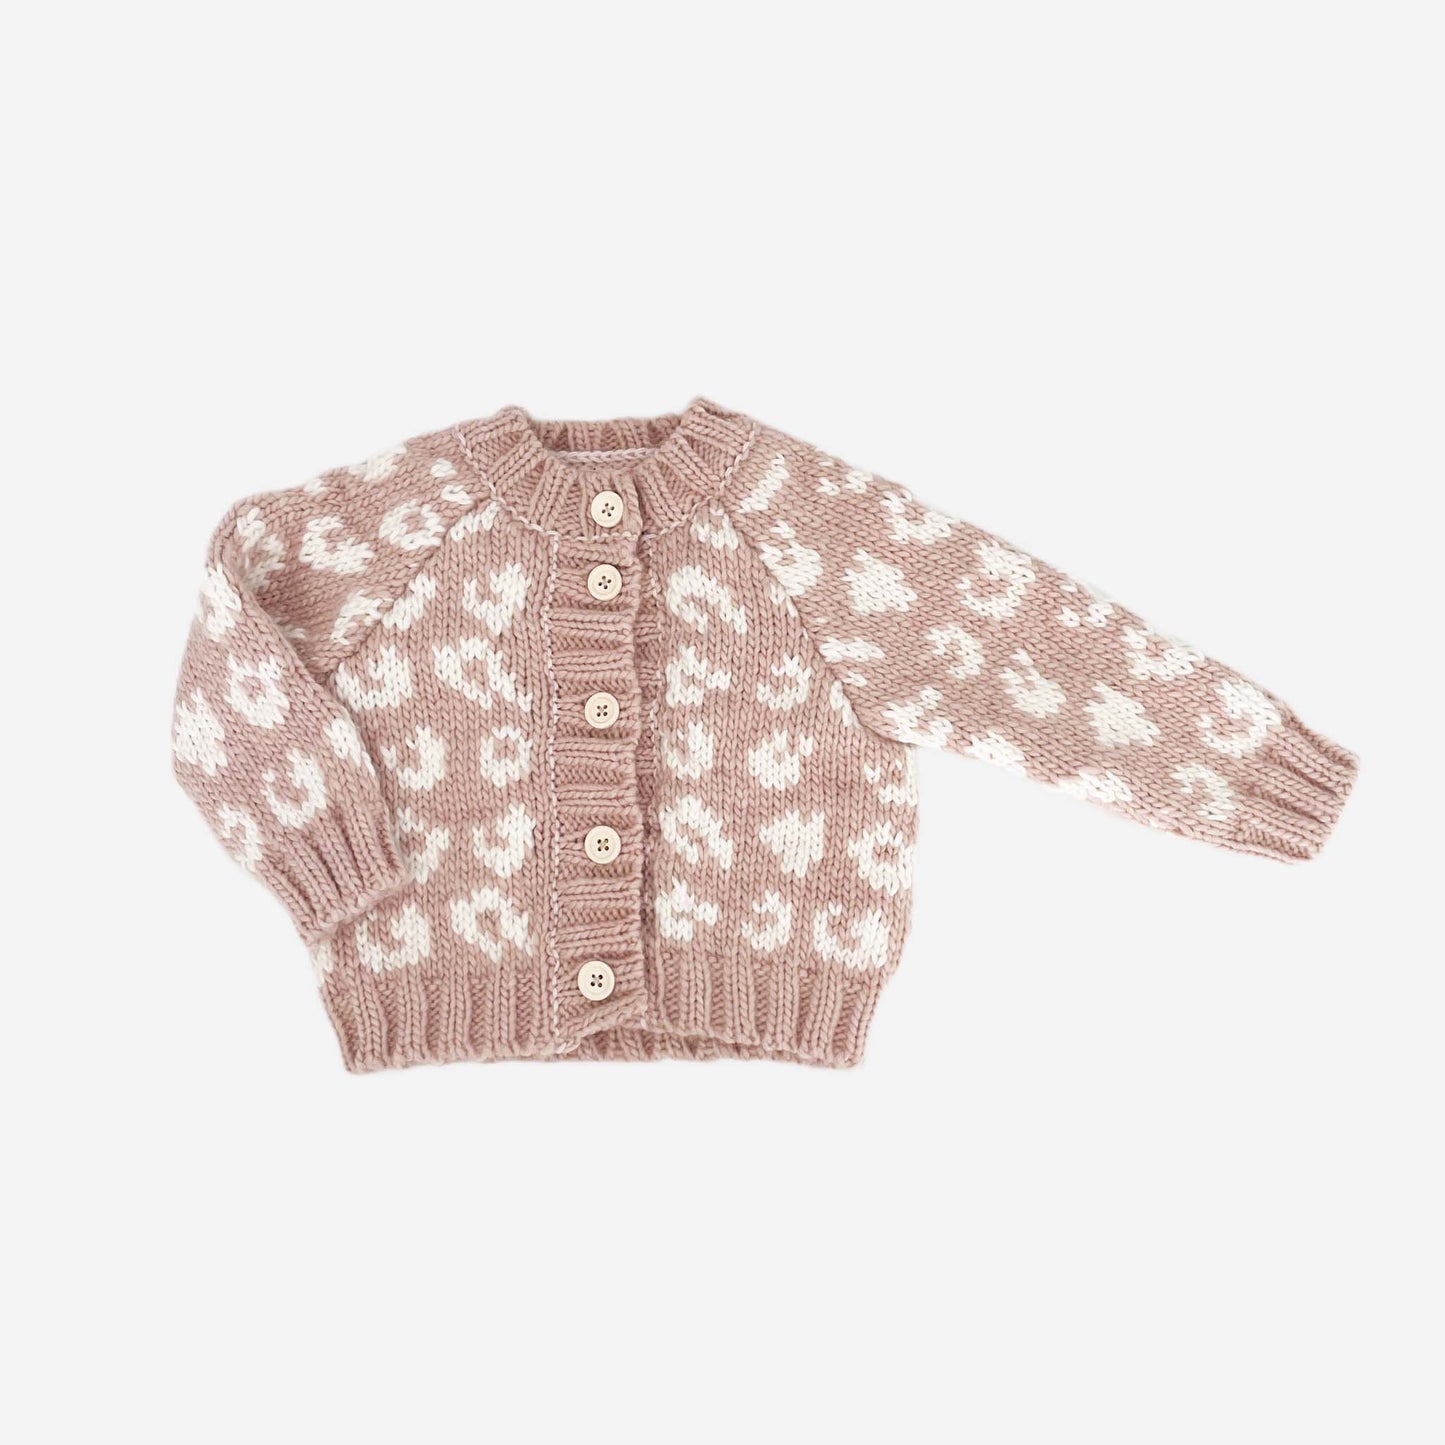 The Blueberry Hill girls cheetah print sweater